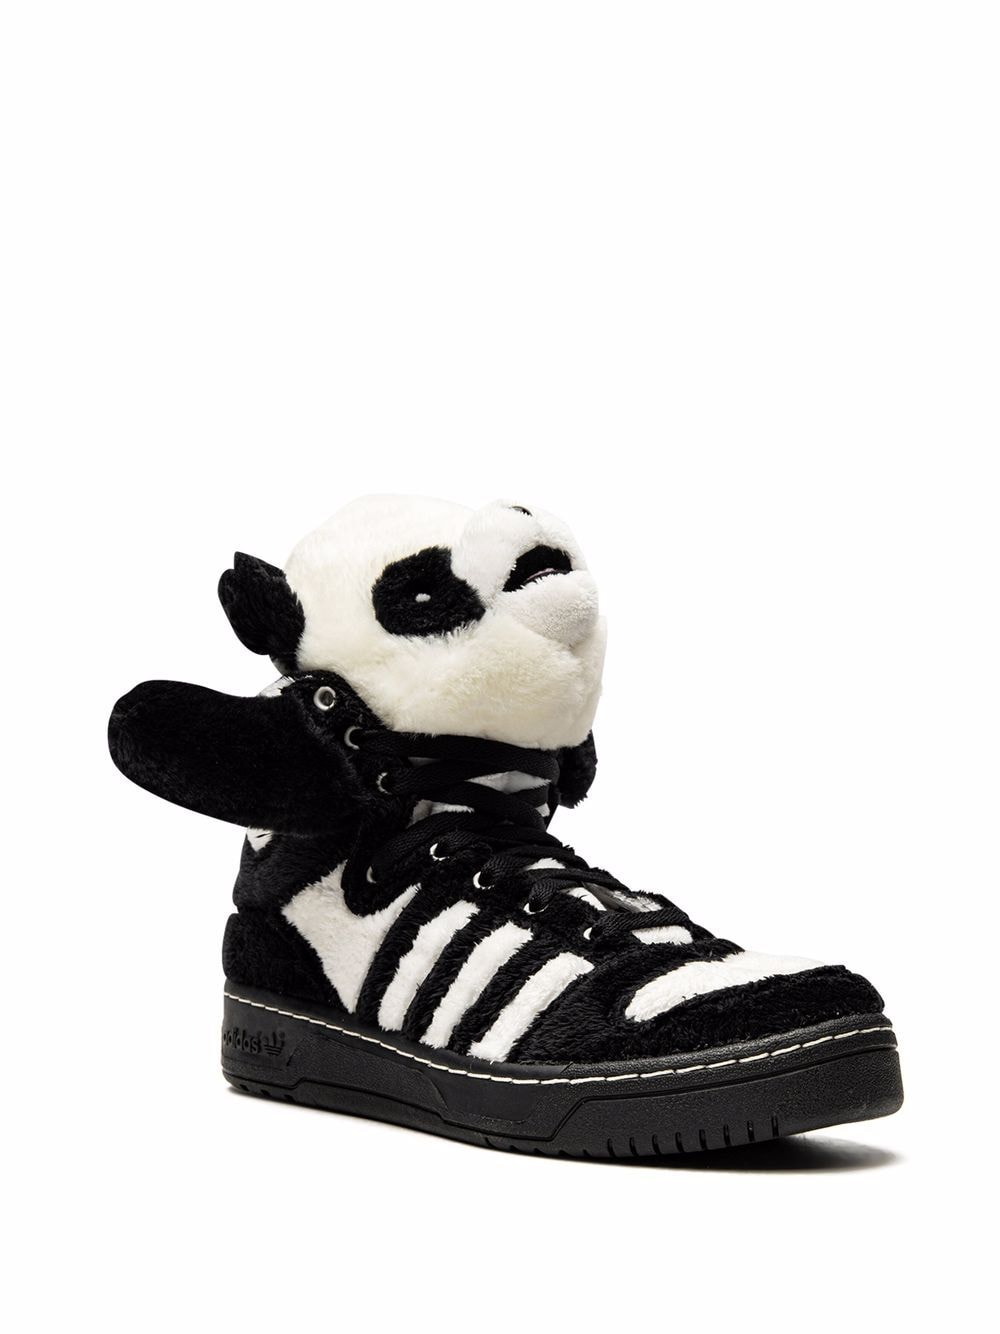 Adidas x Jeremy Scott Panda Bear Sneakers - Farfetch